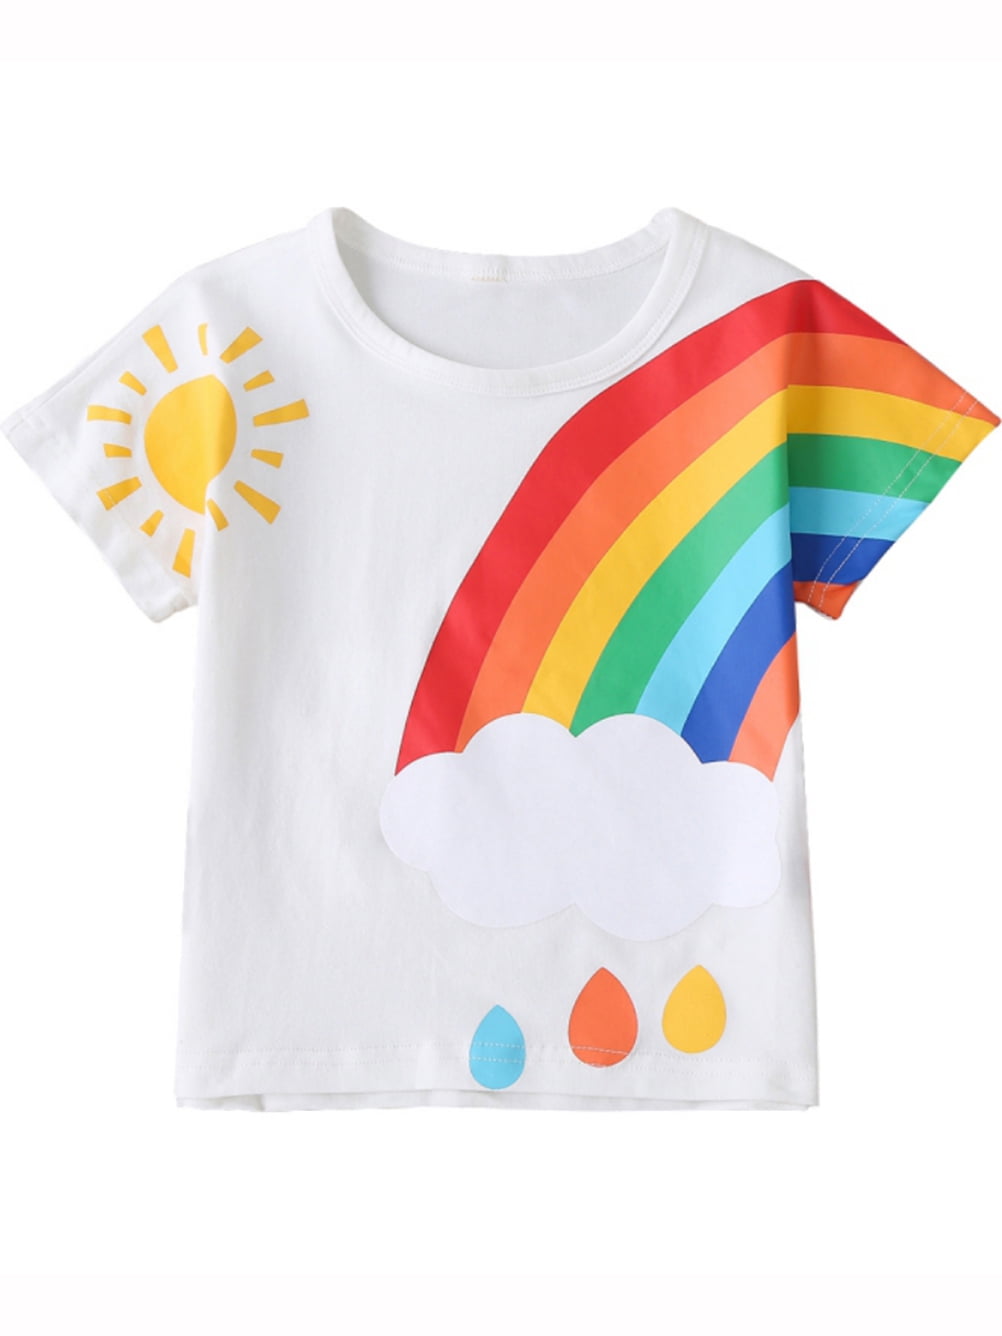 Kids Baby Girls Boy Child Summer T-Shirt Short Sleeve Rainbow Top Shirts Clothes -